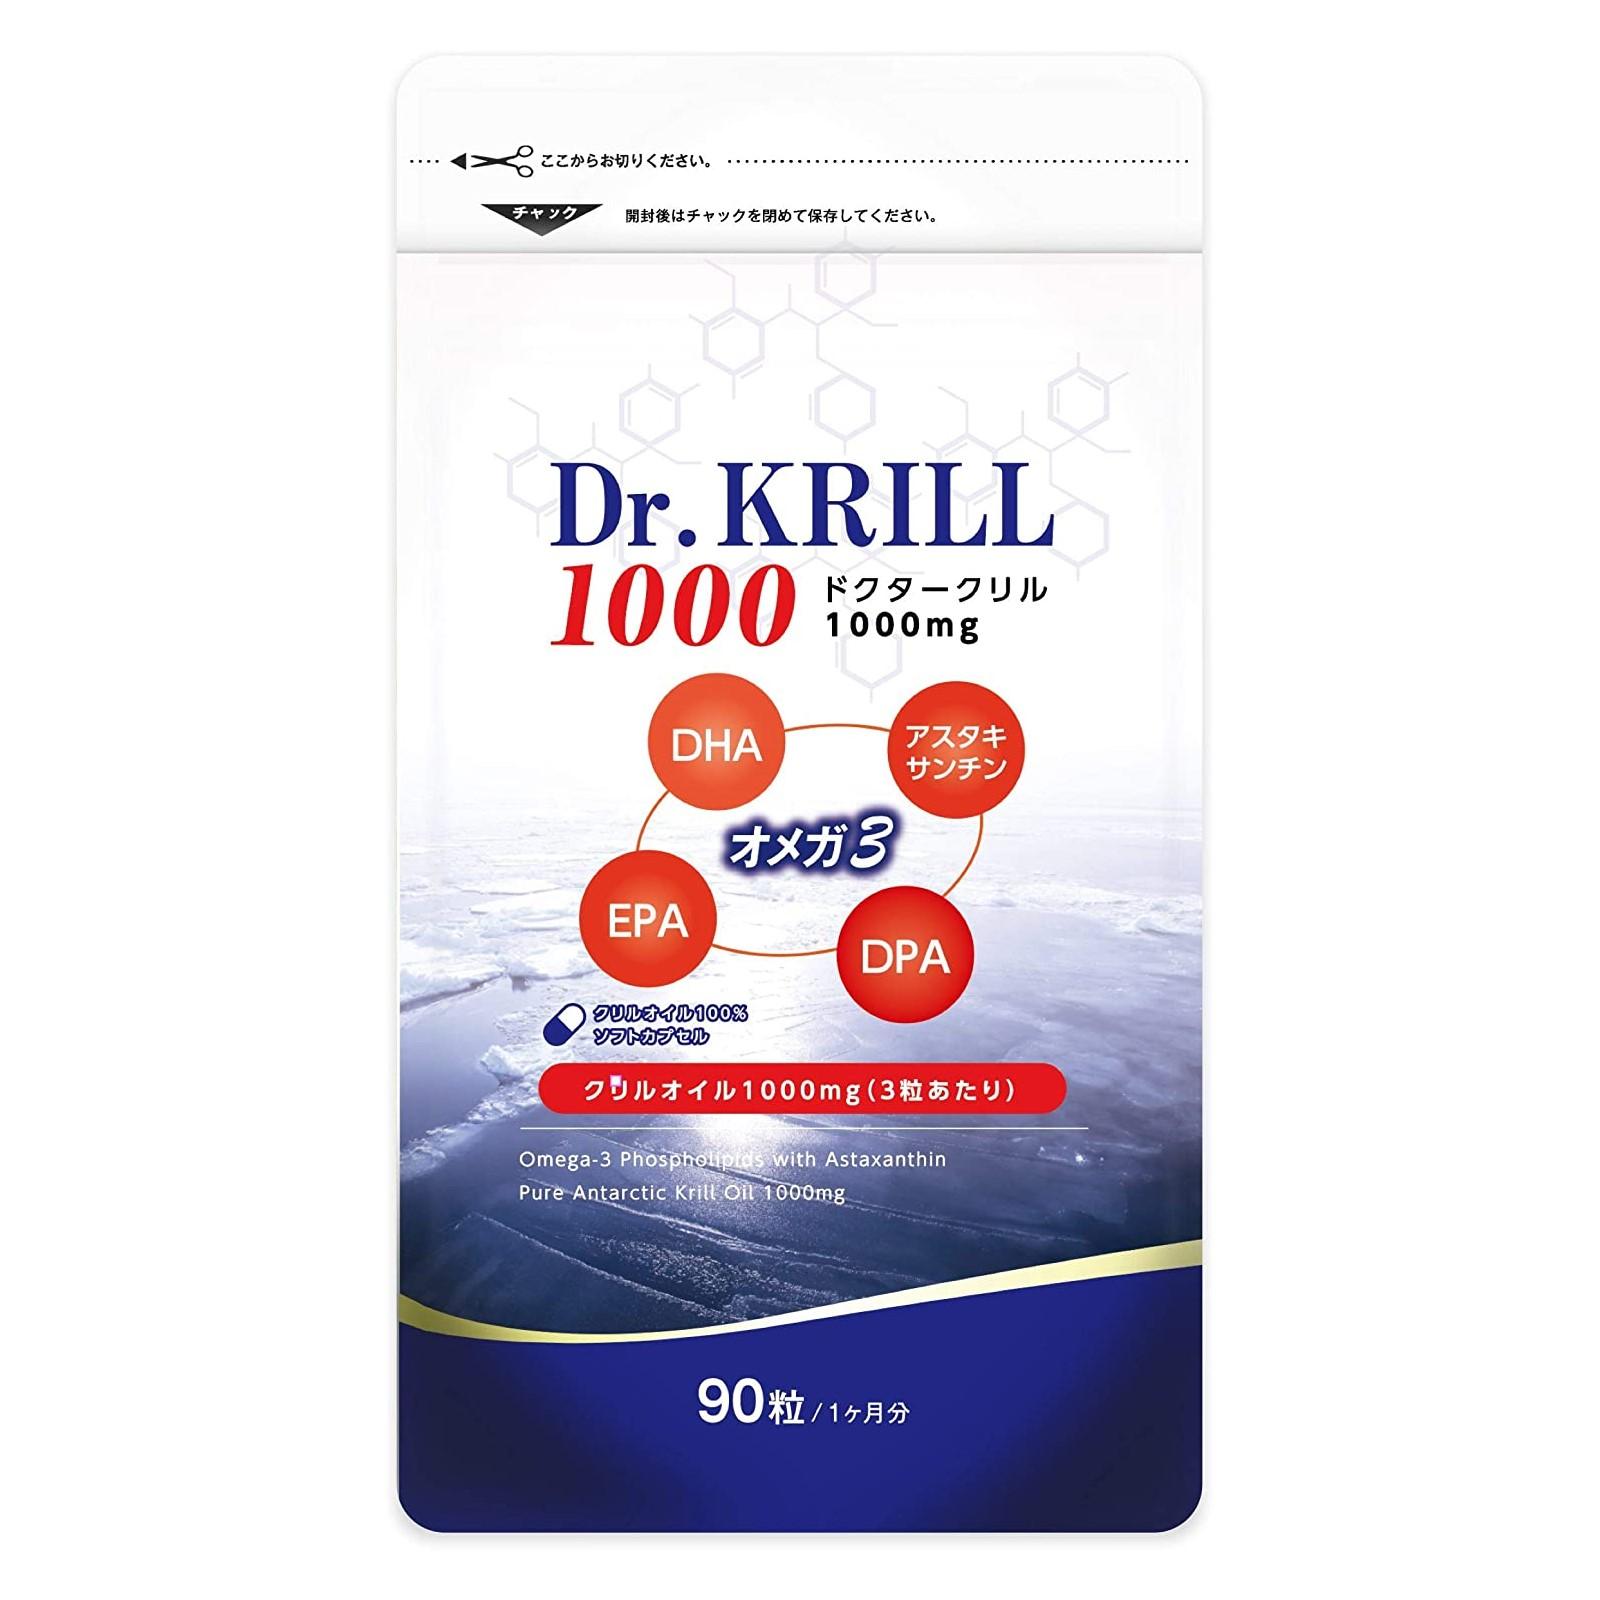 azimka docteur. krill omega-3 dha/epa 1000 extrait d'huile de krill antarctique, 90 gÃ©lules donna